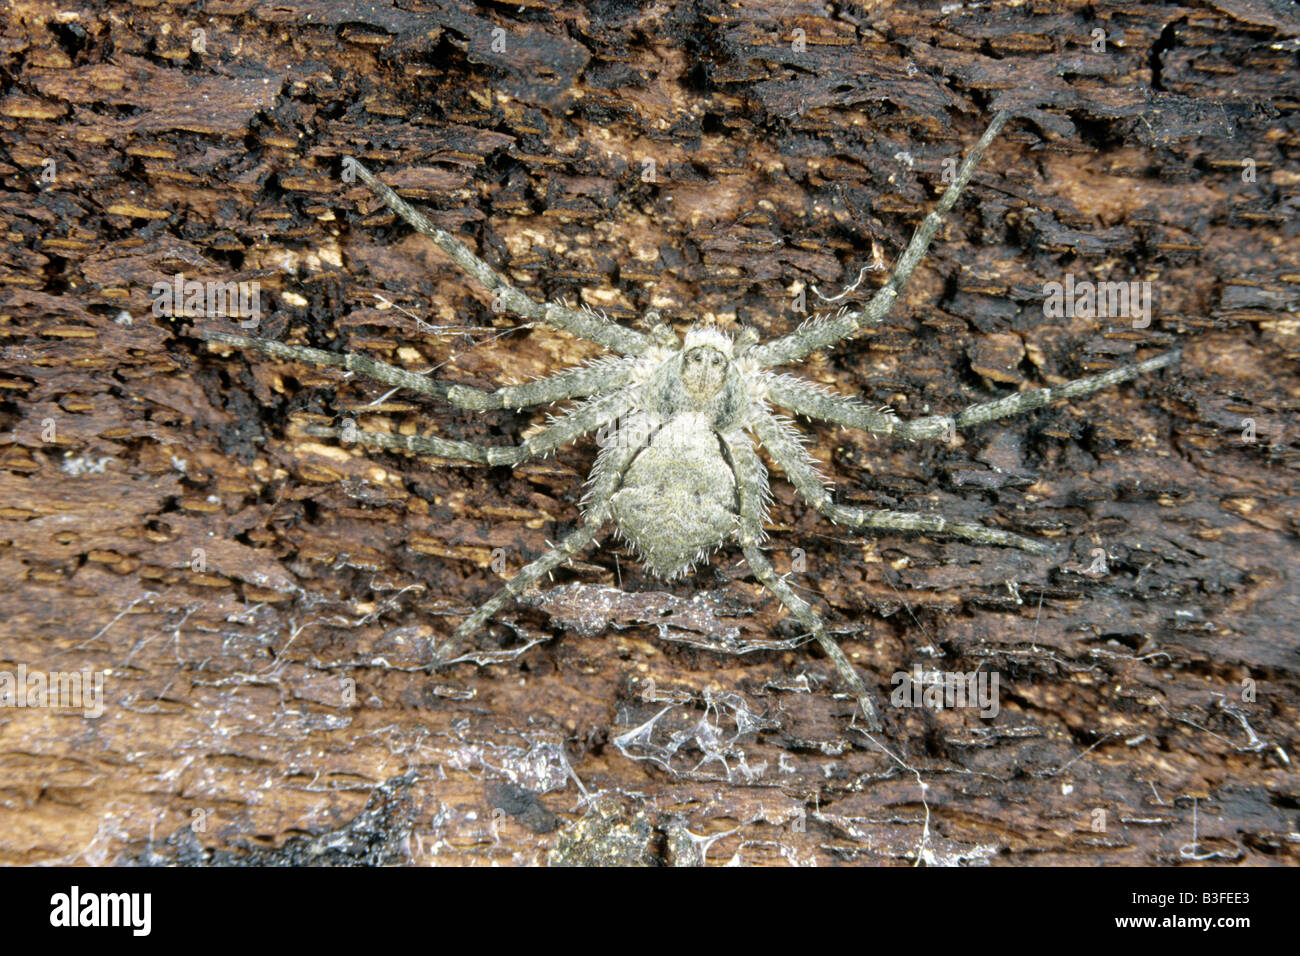 Philodromid cangrejo araña, ejecutando el cangrejo araña (Philodromus marginatus) hembra subcortical Foto de stock